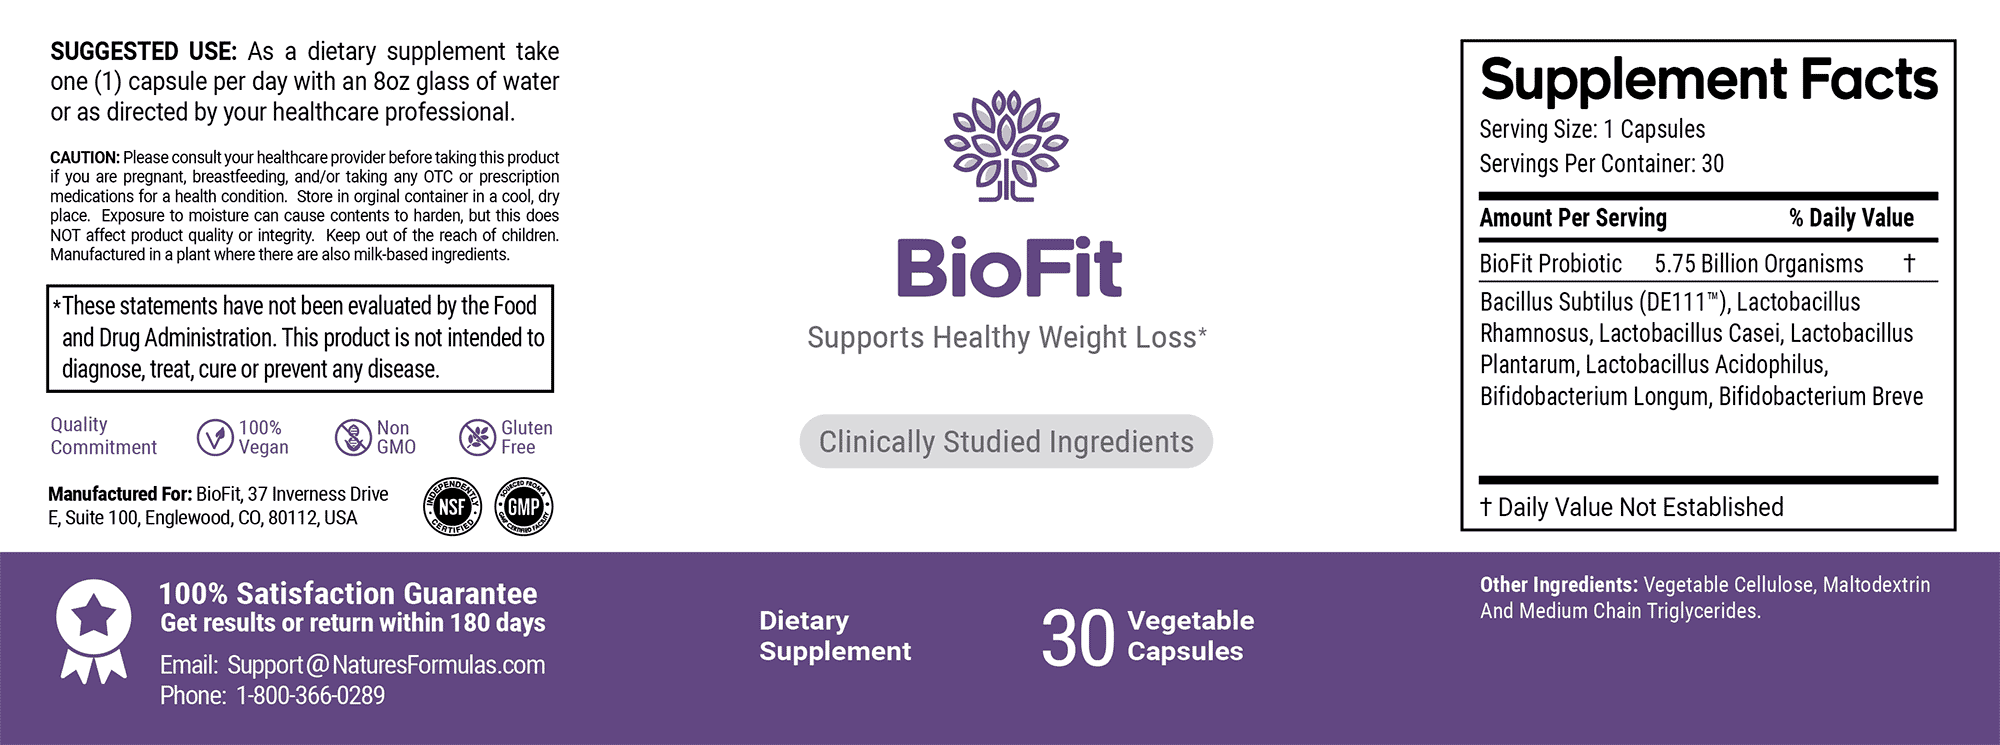 Biofit ingredients